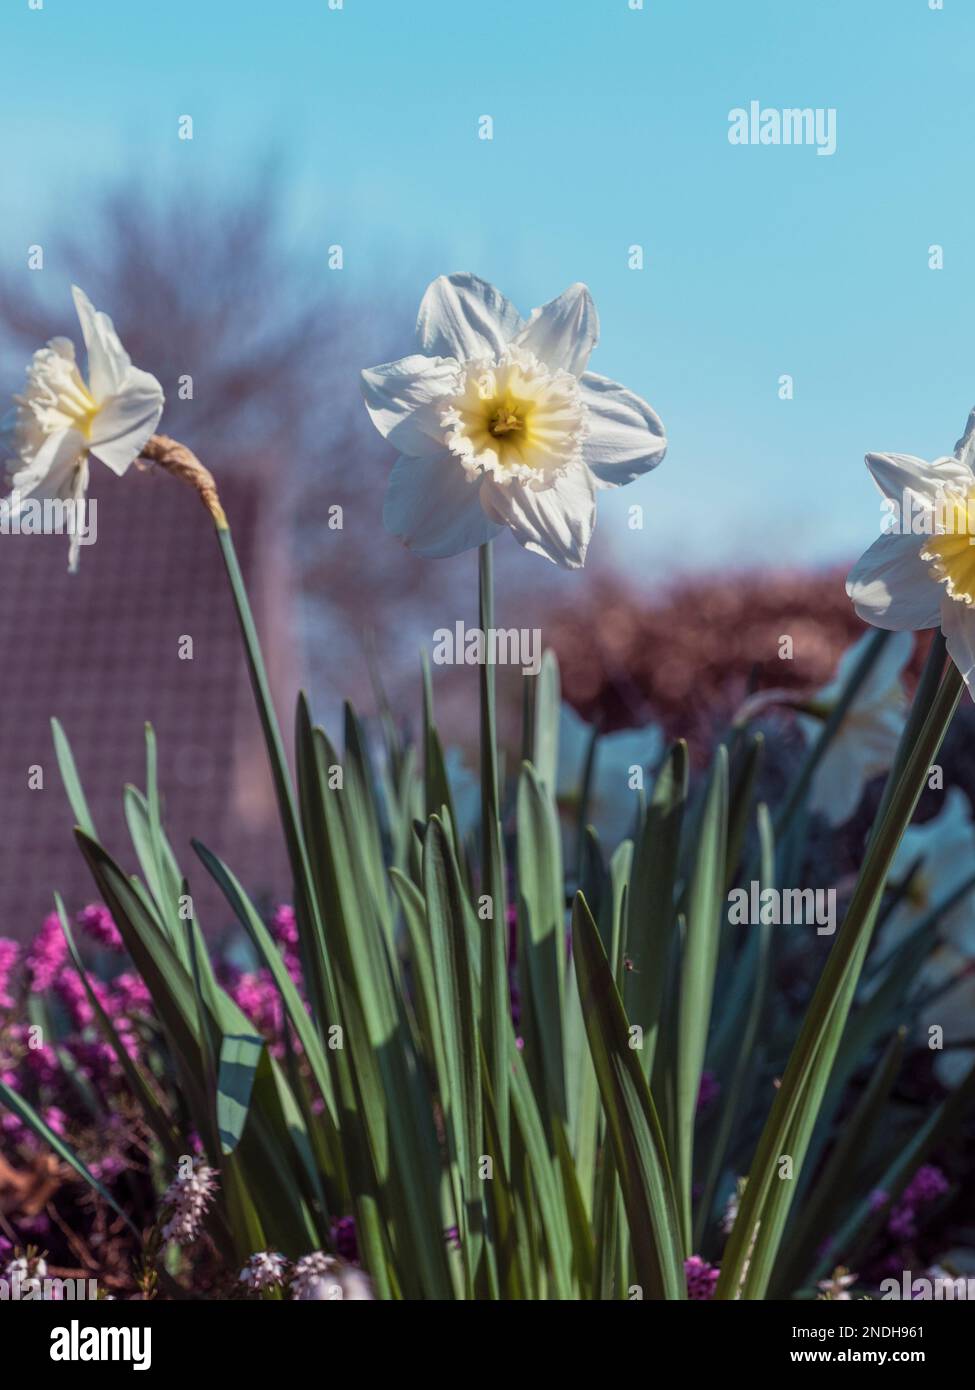 Upward shot of white daffodils (Narcissus) in garden border against blue sky Stock Photo